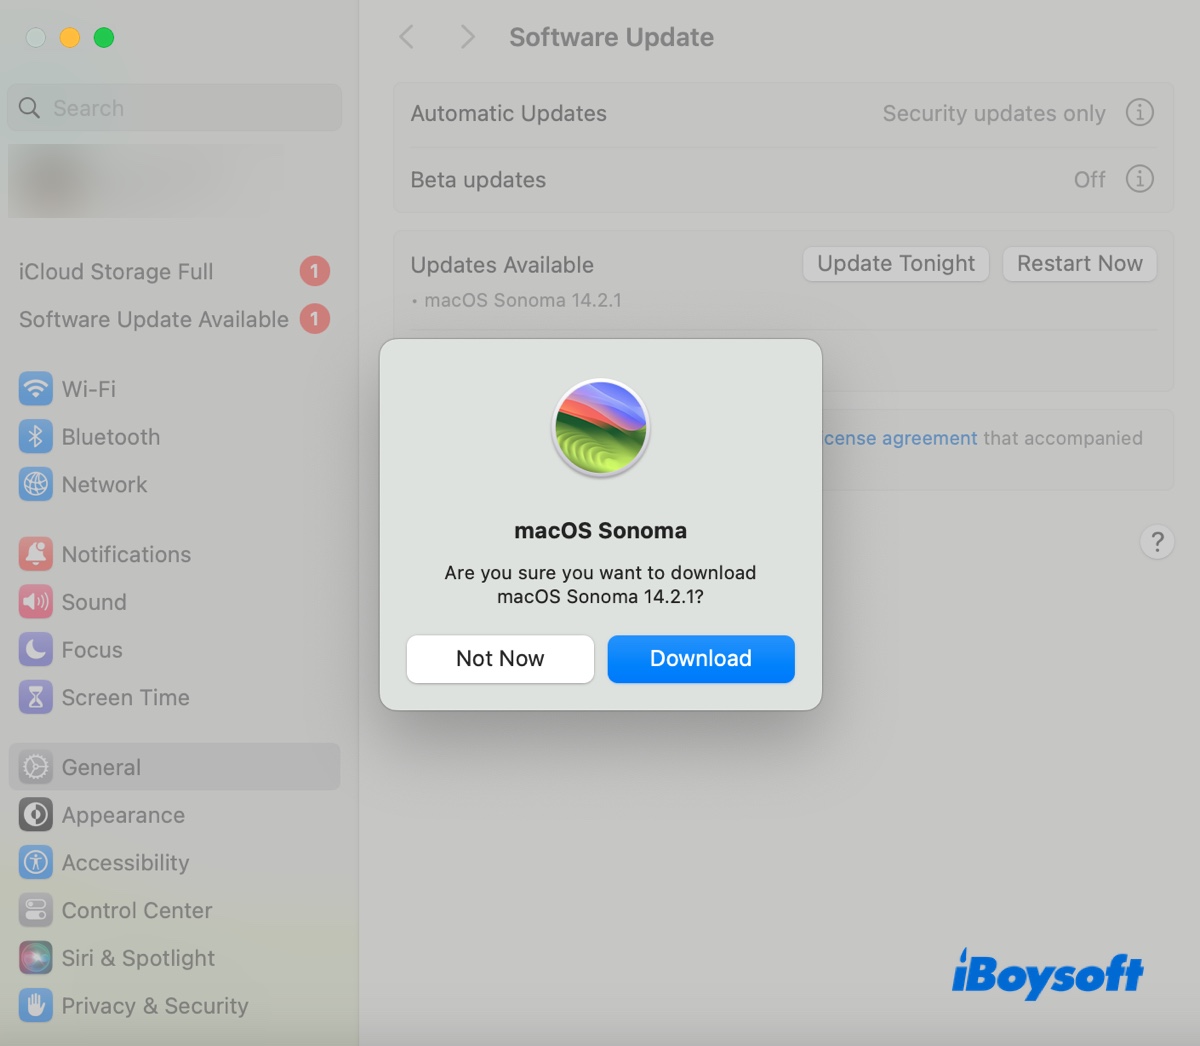 Confirm to download macOS Sonoma installer